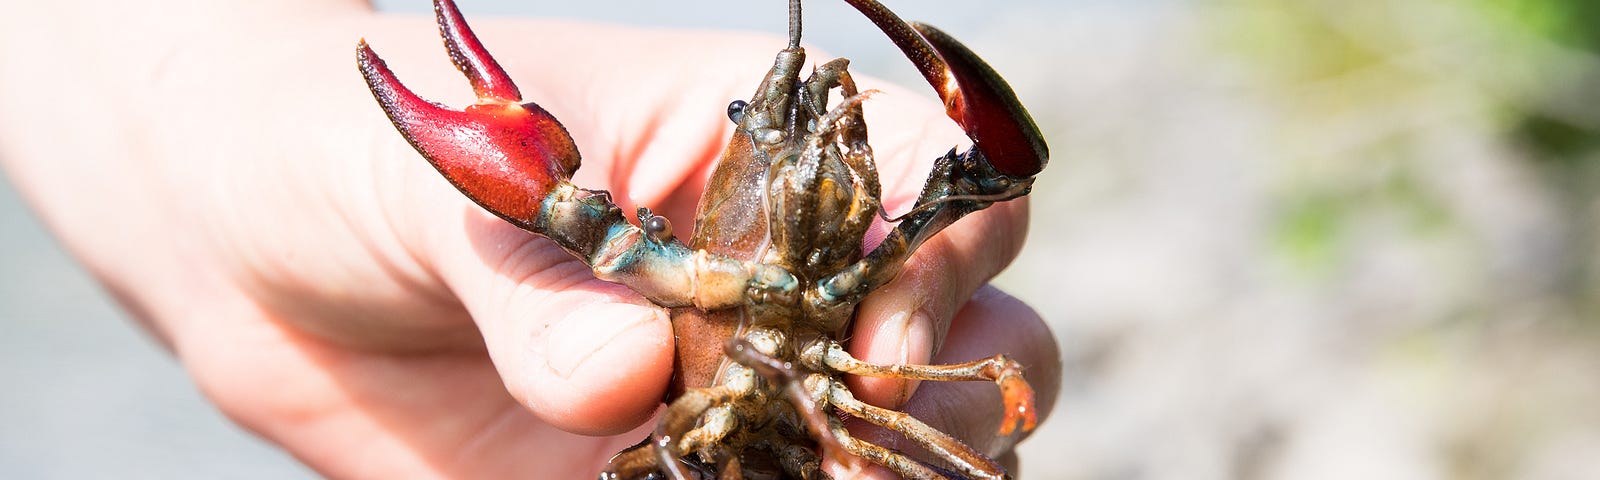 crayfish in someone’s hand